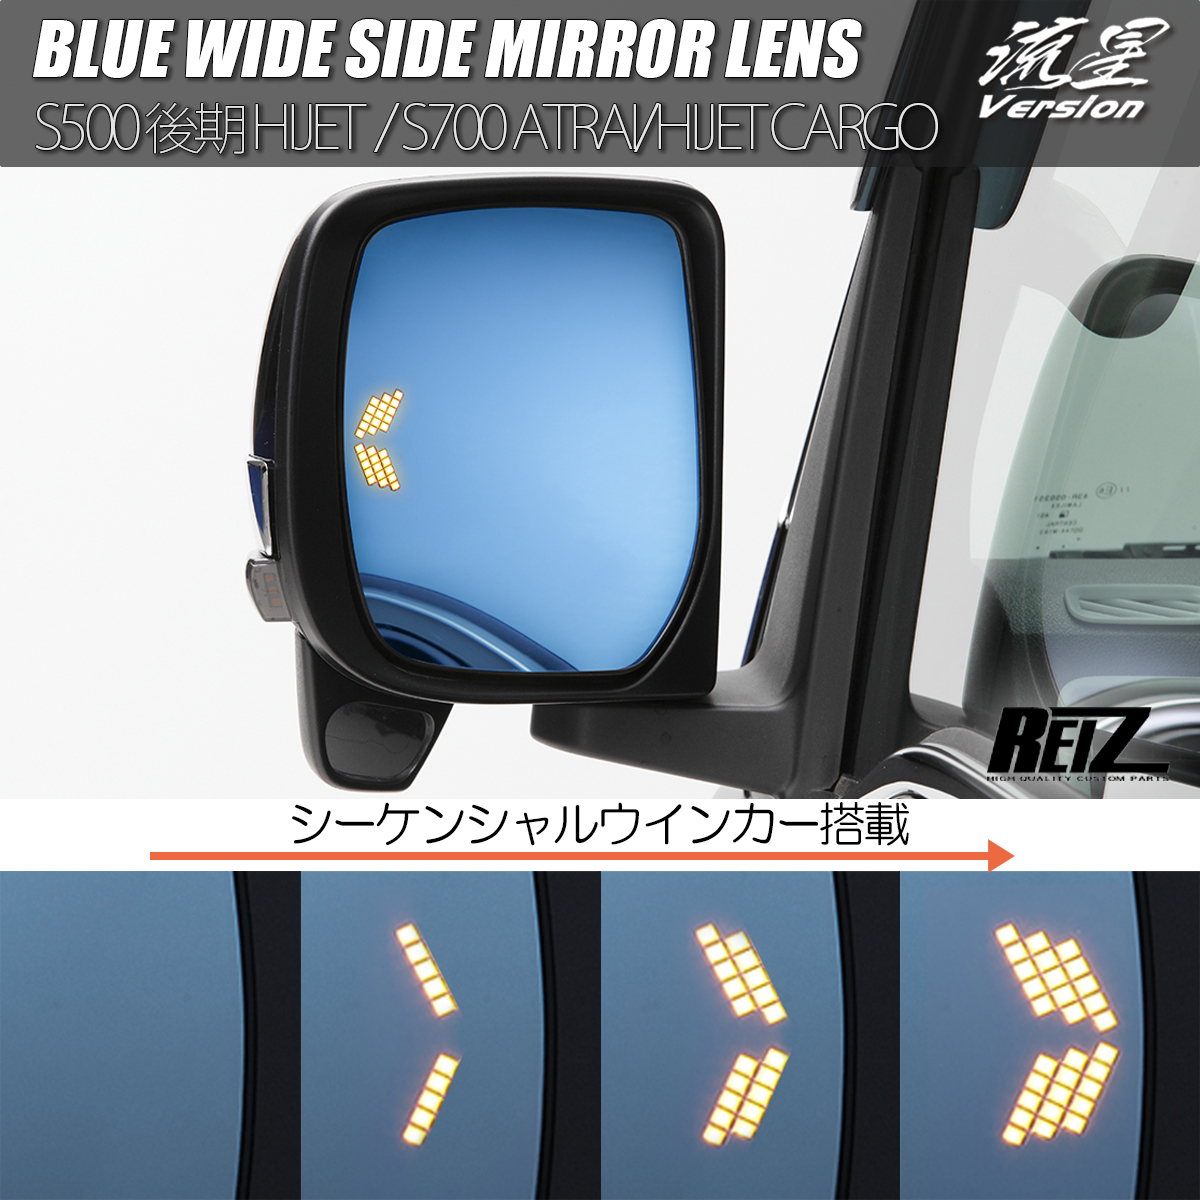 S700V S710V Atrai Hijet Cargo turn signal built-in blue wide mirror . star VERSION sequential winker door mirror 